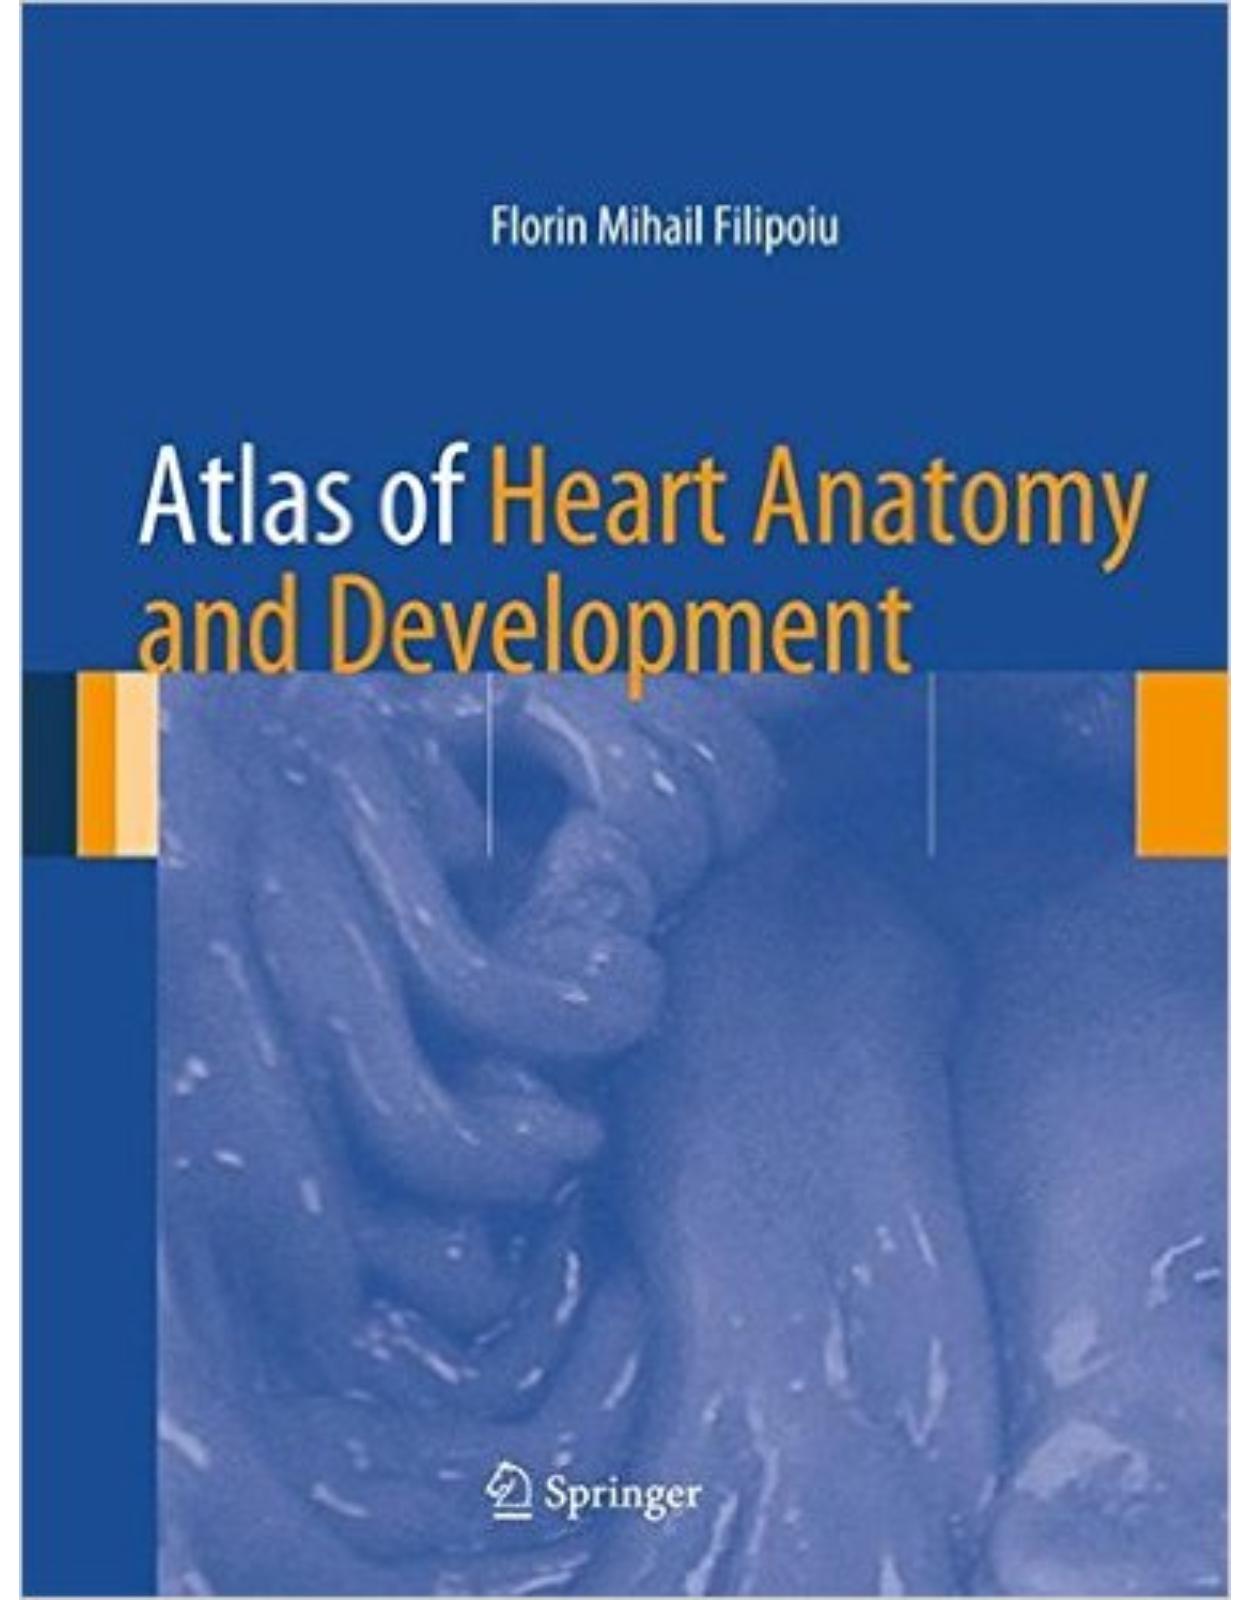  Atlas of Heart Anatomy and Development